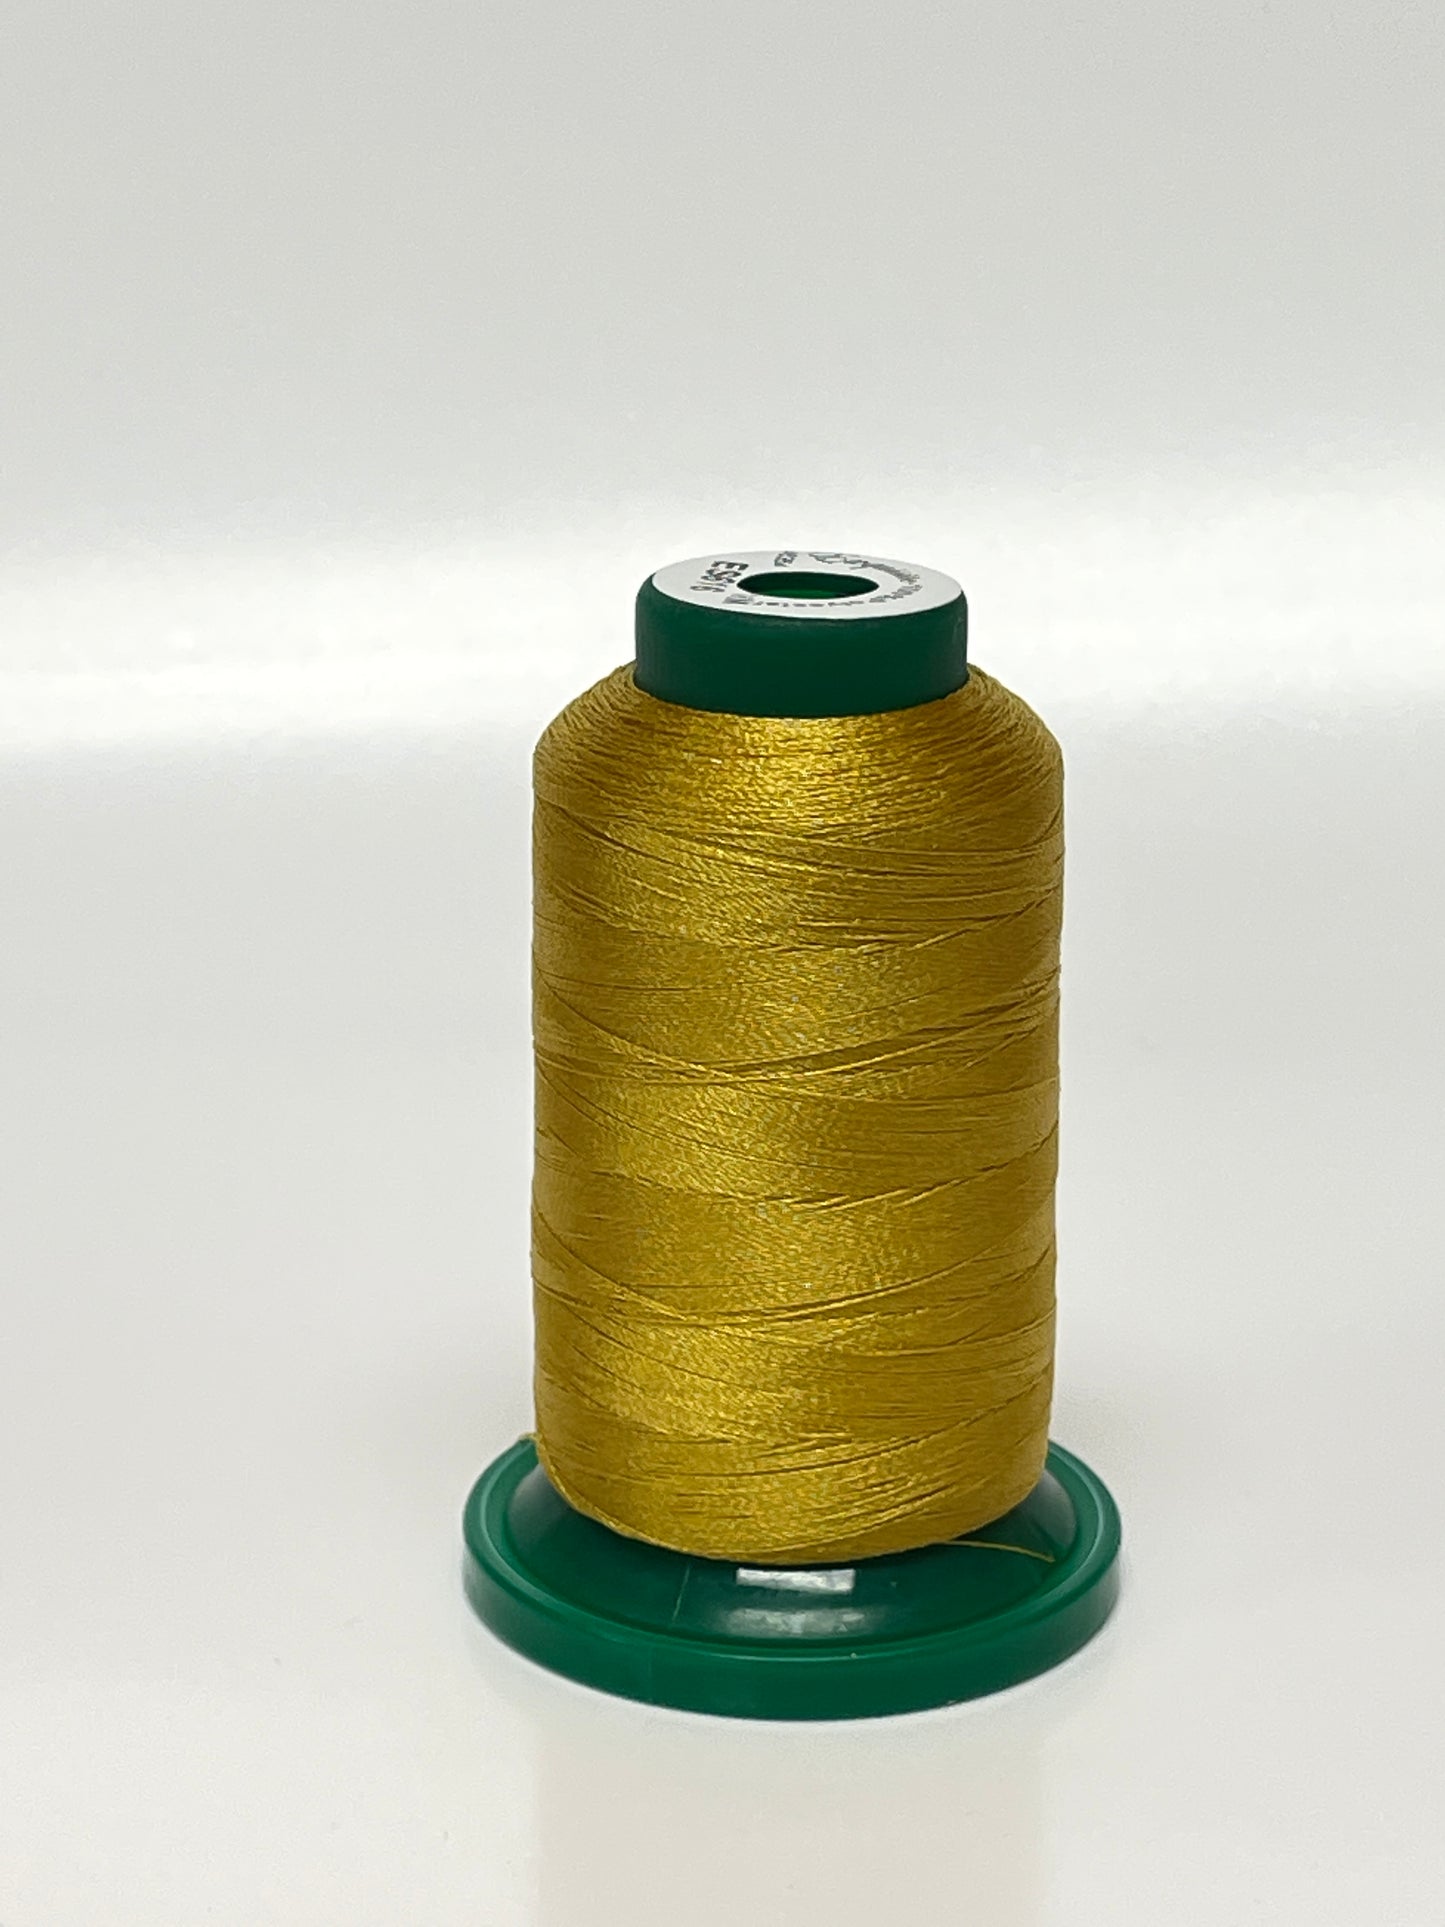 Exquisite Embroidery Thread - Neutrals